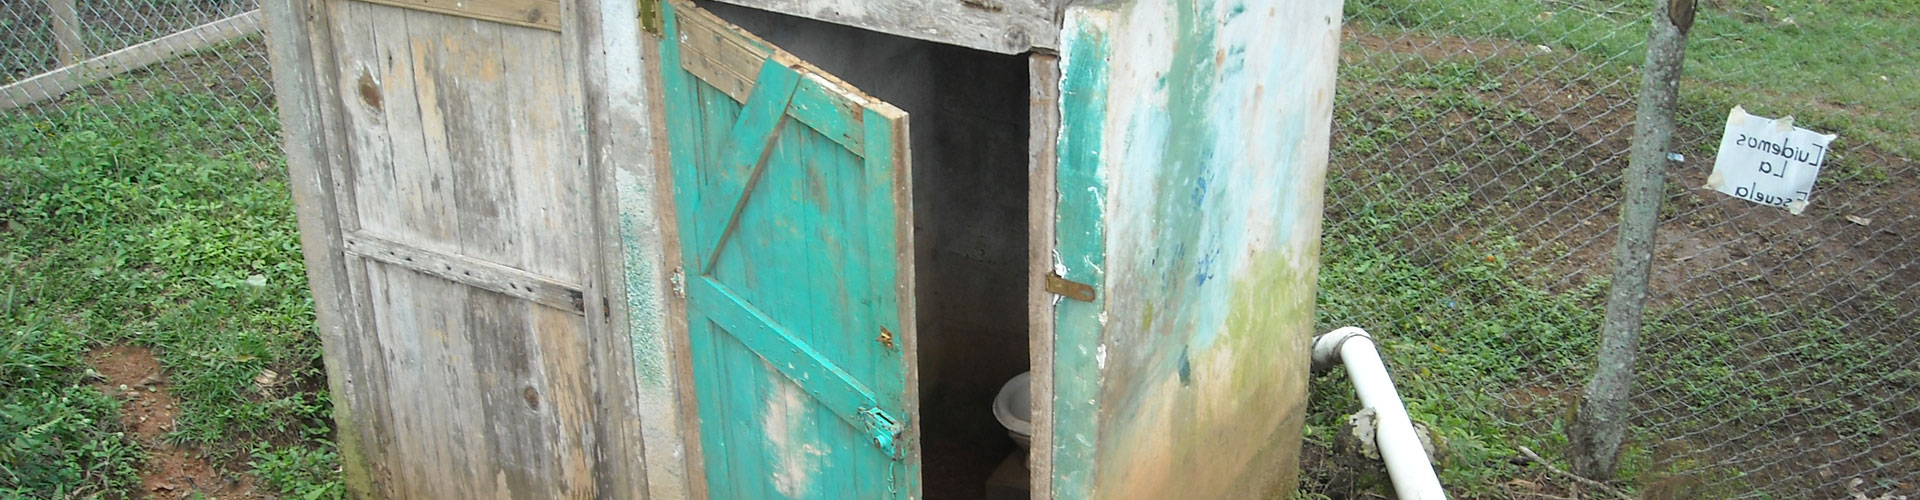 Inadequate Sanitary Facilities